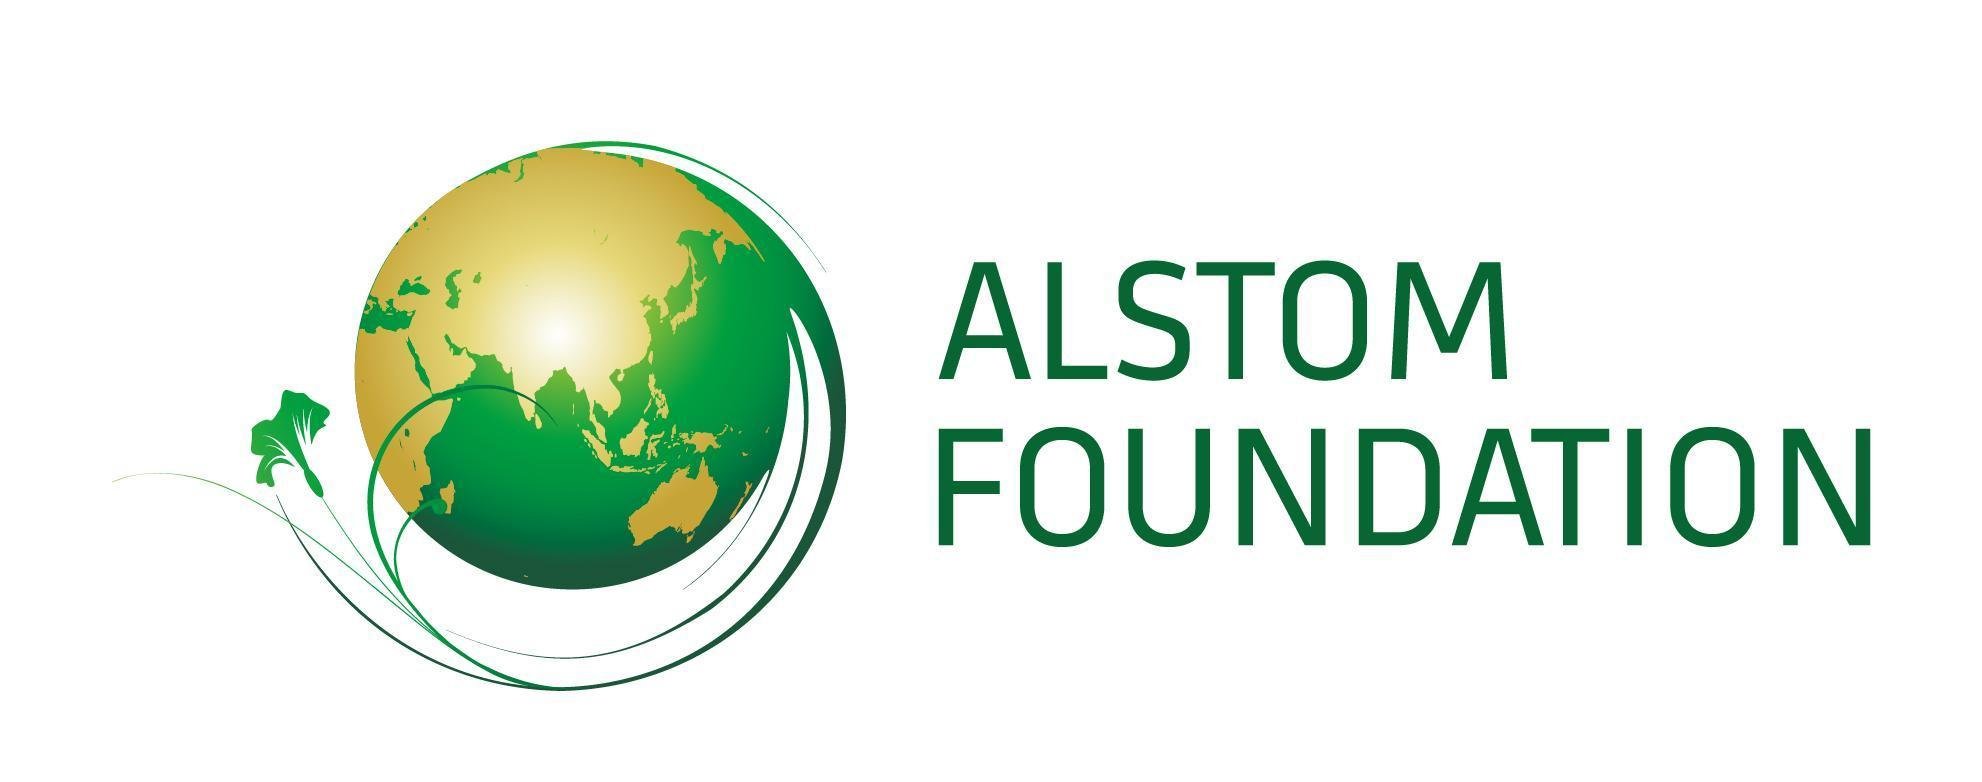 Alstom Foundation Logo.jpg